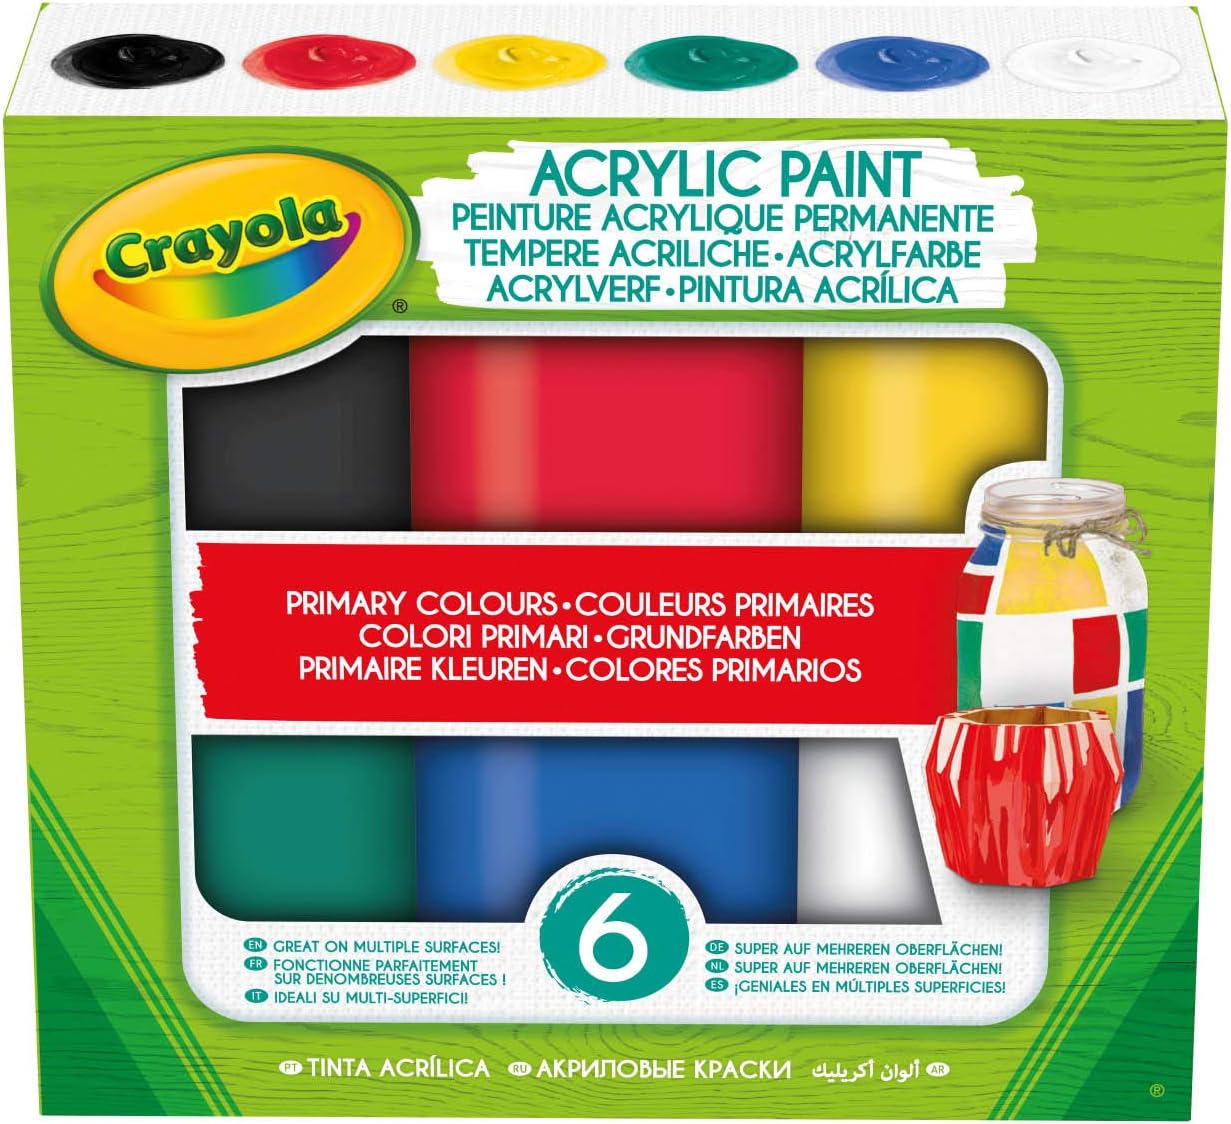 Crayola - 6 Primary Acrylic Color Paint